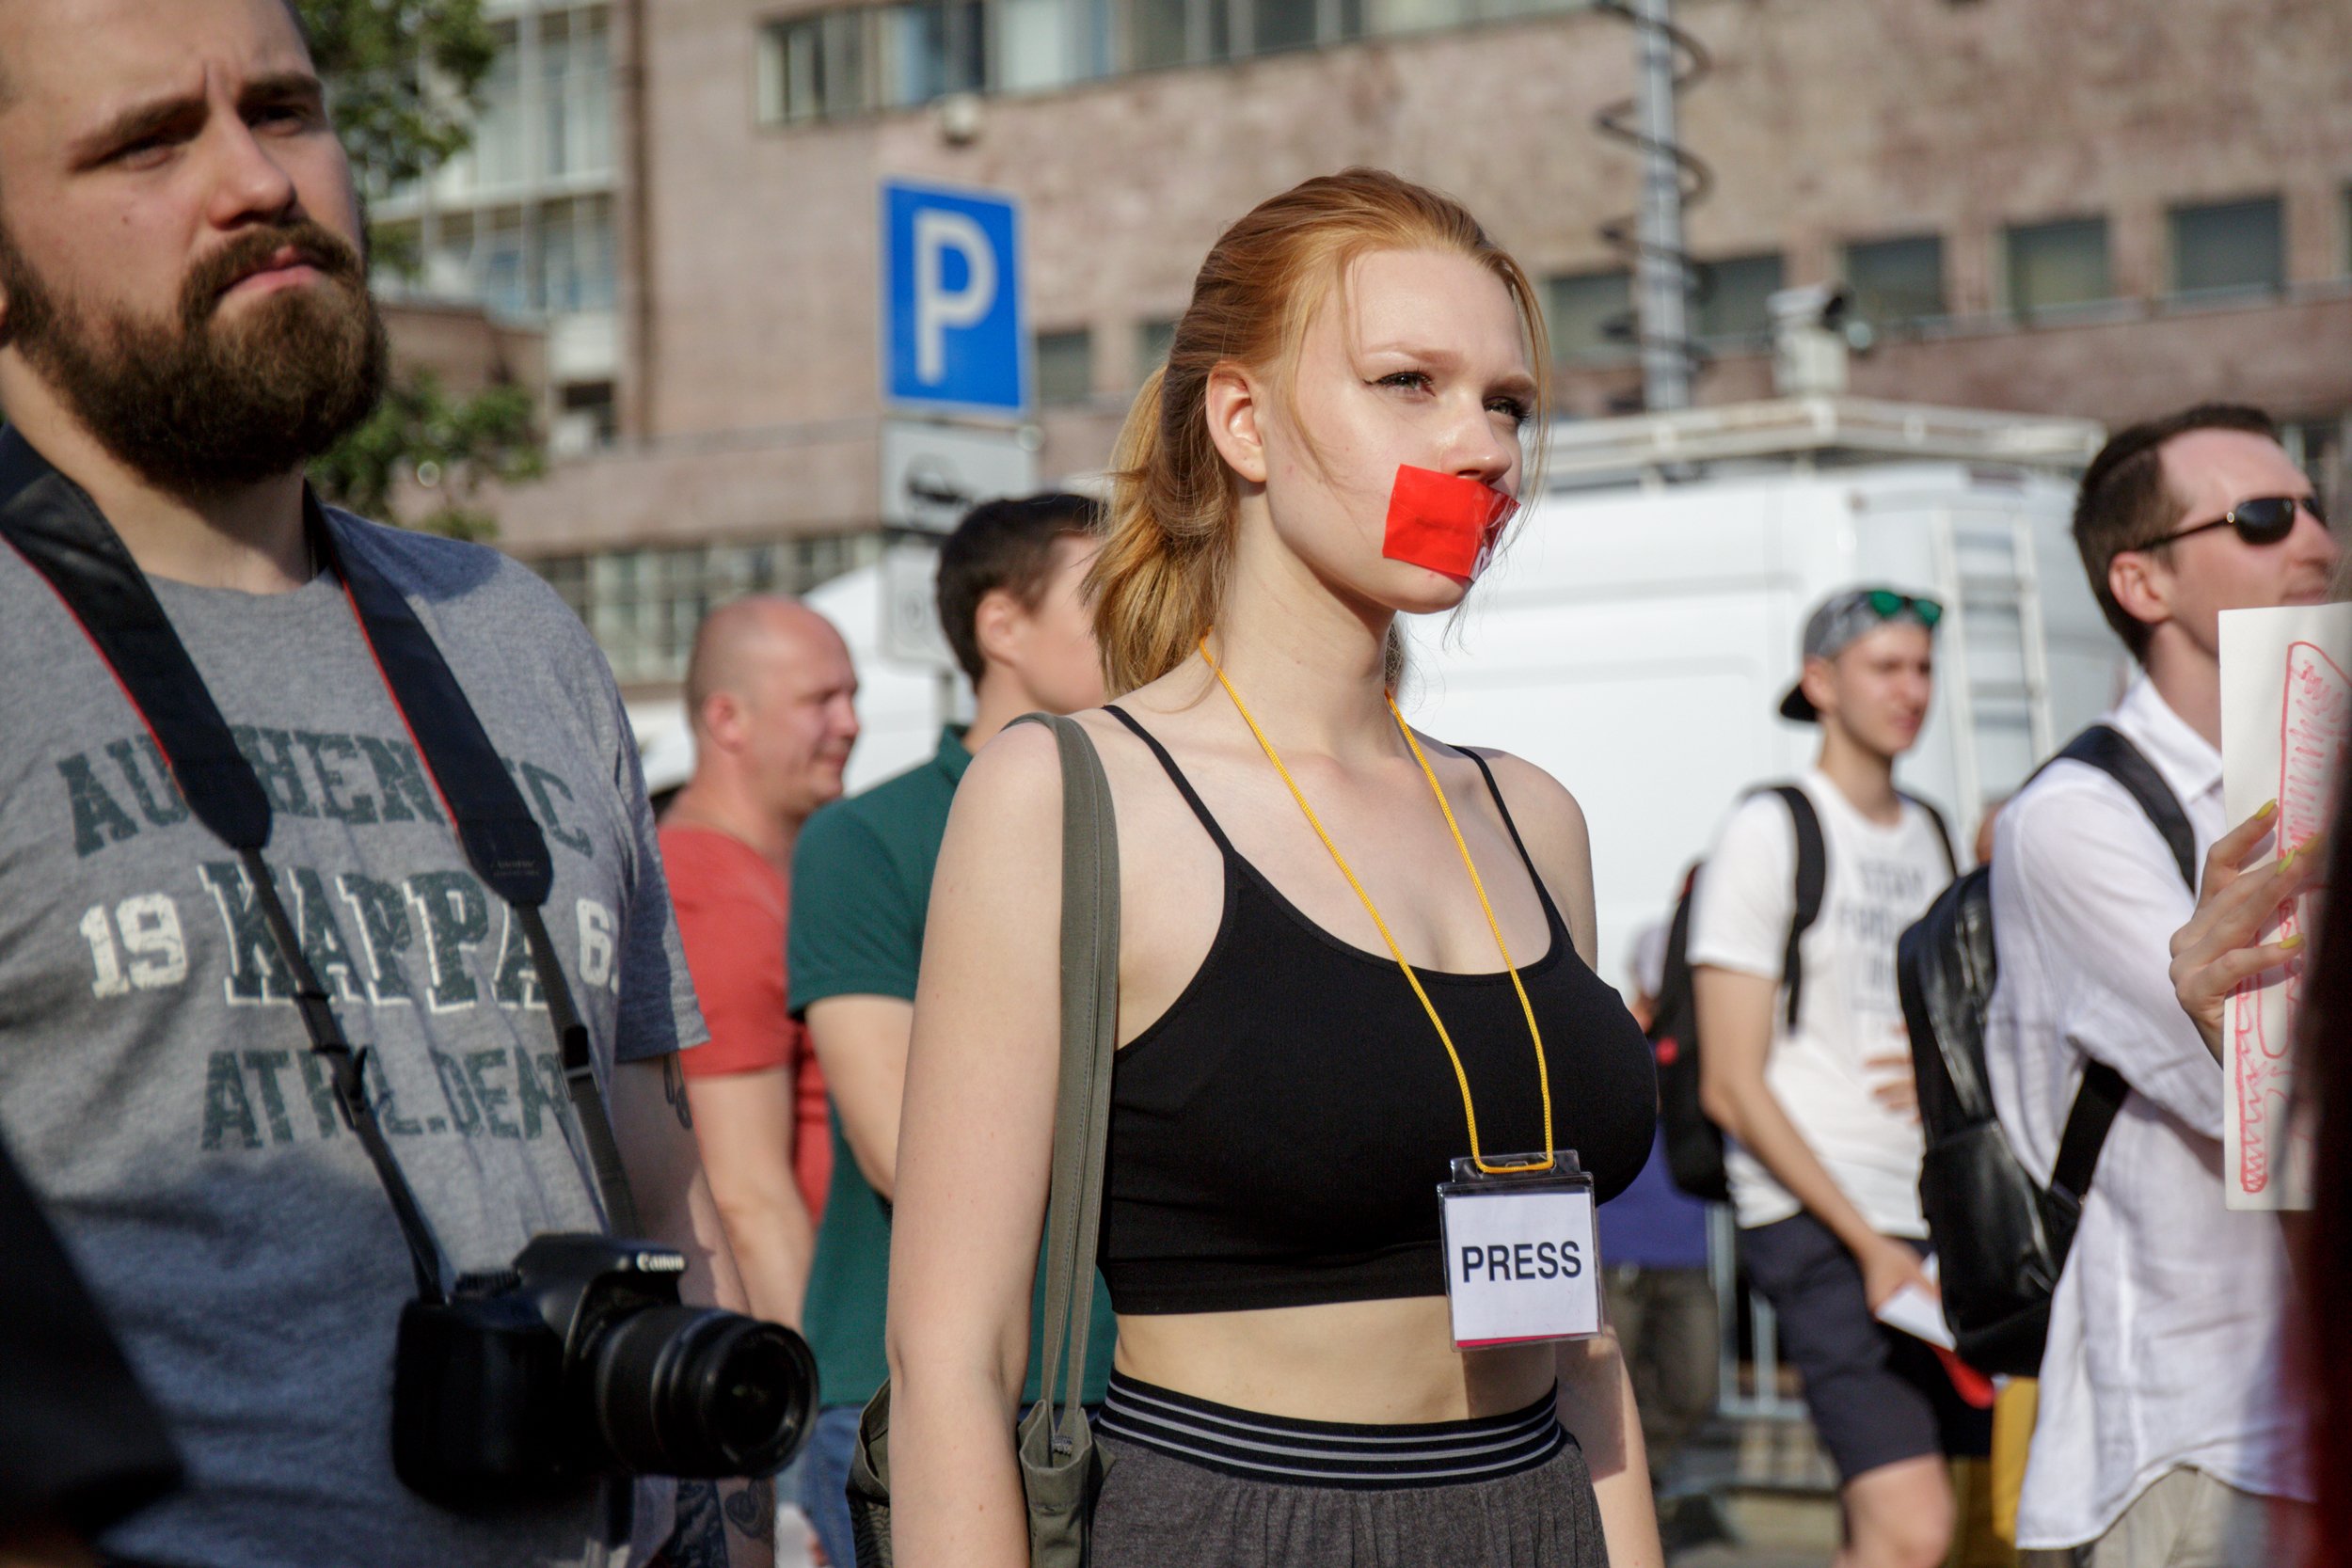 иван голунов, стрит, митинг, москва, люди, репортаж, протест, пресса, Ирина Болдина